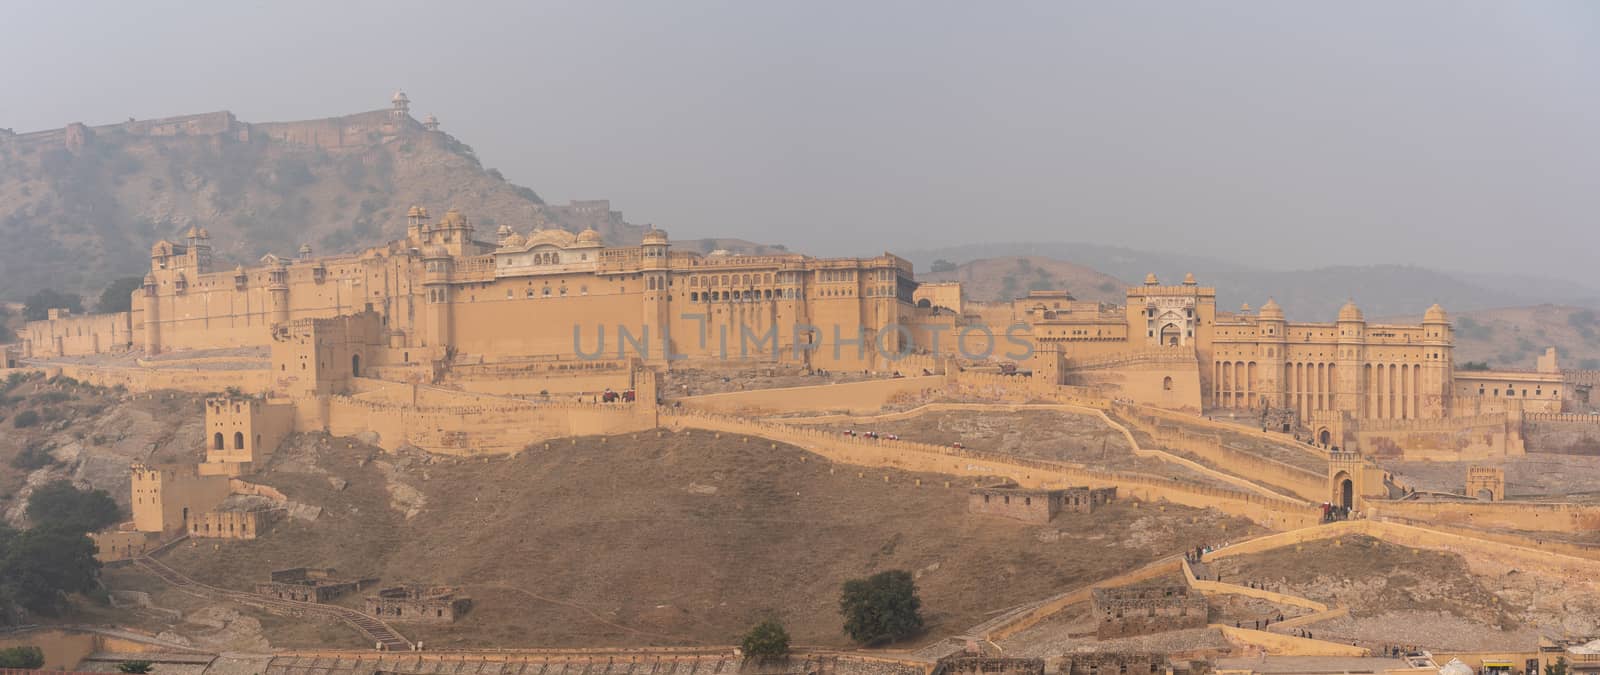 Amber Fort in Jaipur, India by oliverfoerstner